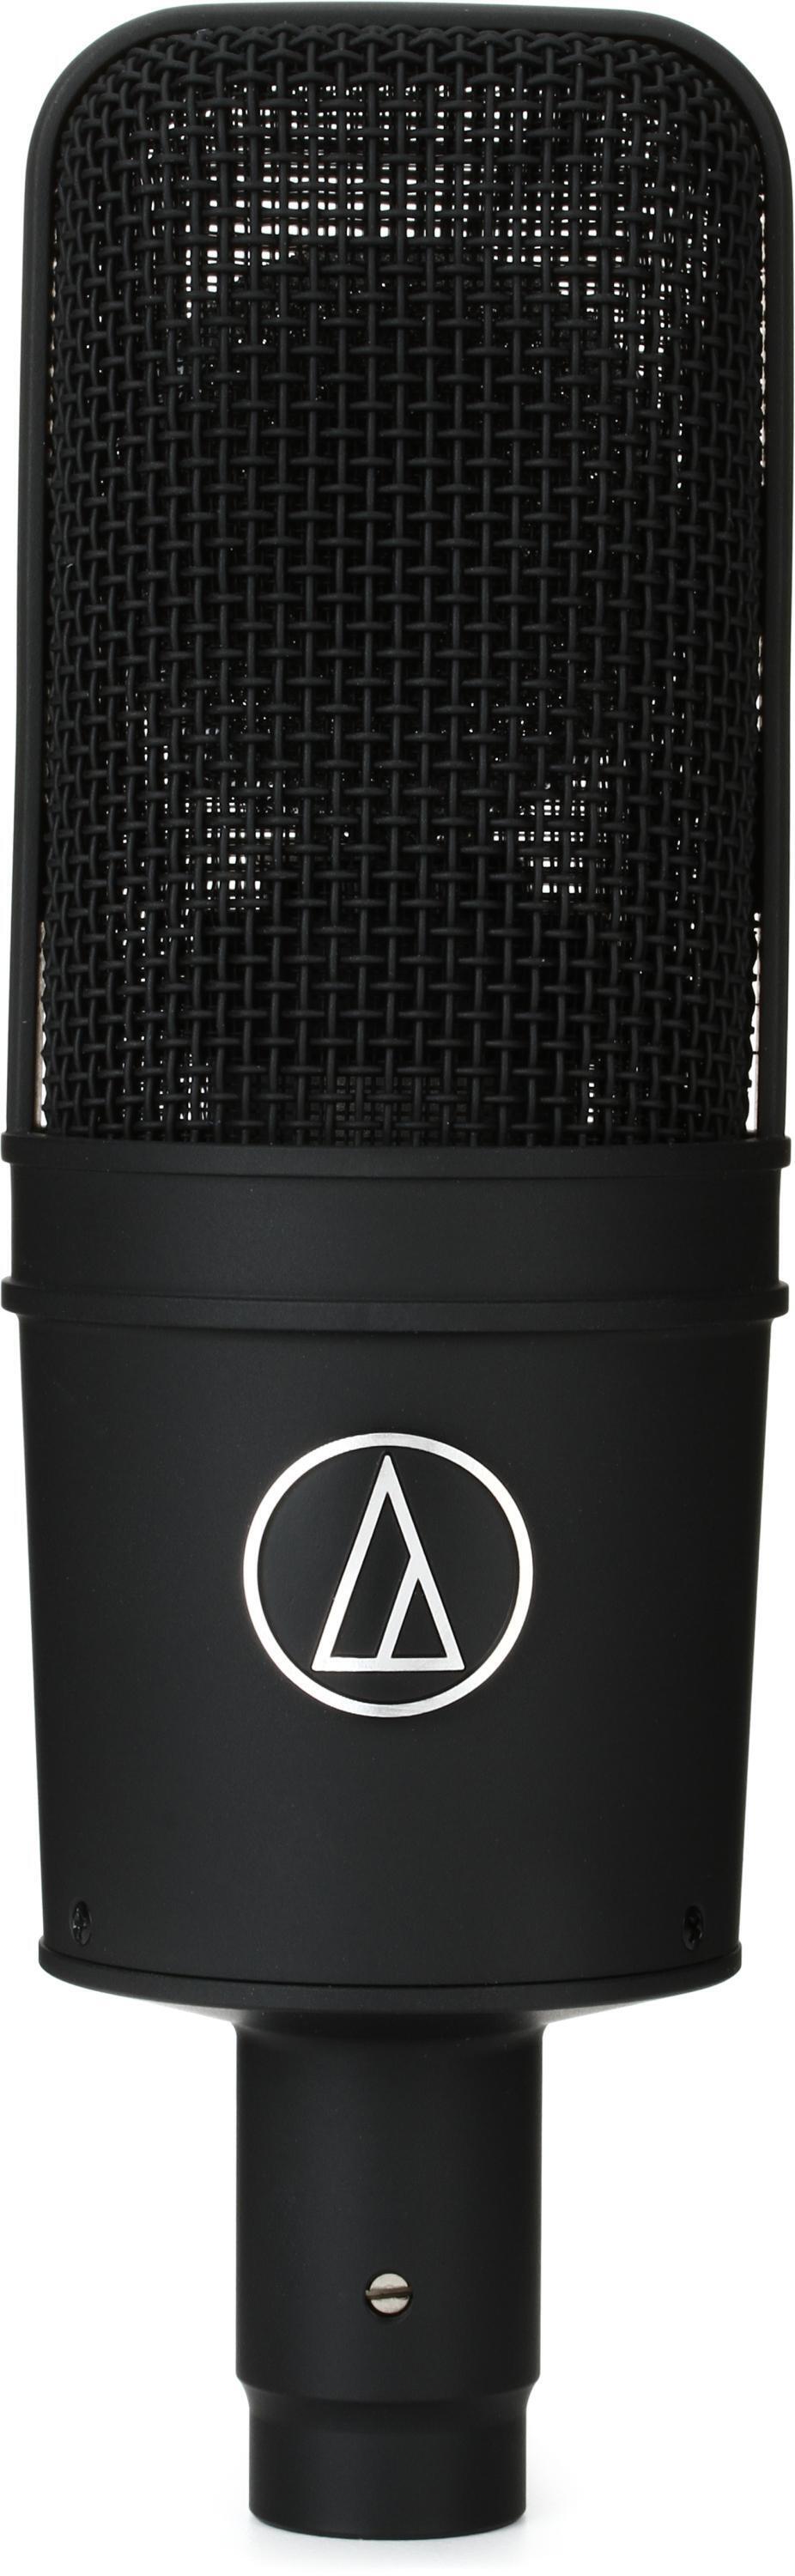 Bundled Item: Audio-Technica AT4033A Medium-diaphragm Condenser Microphone